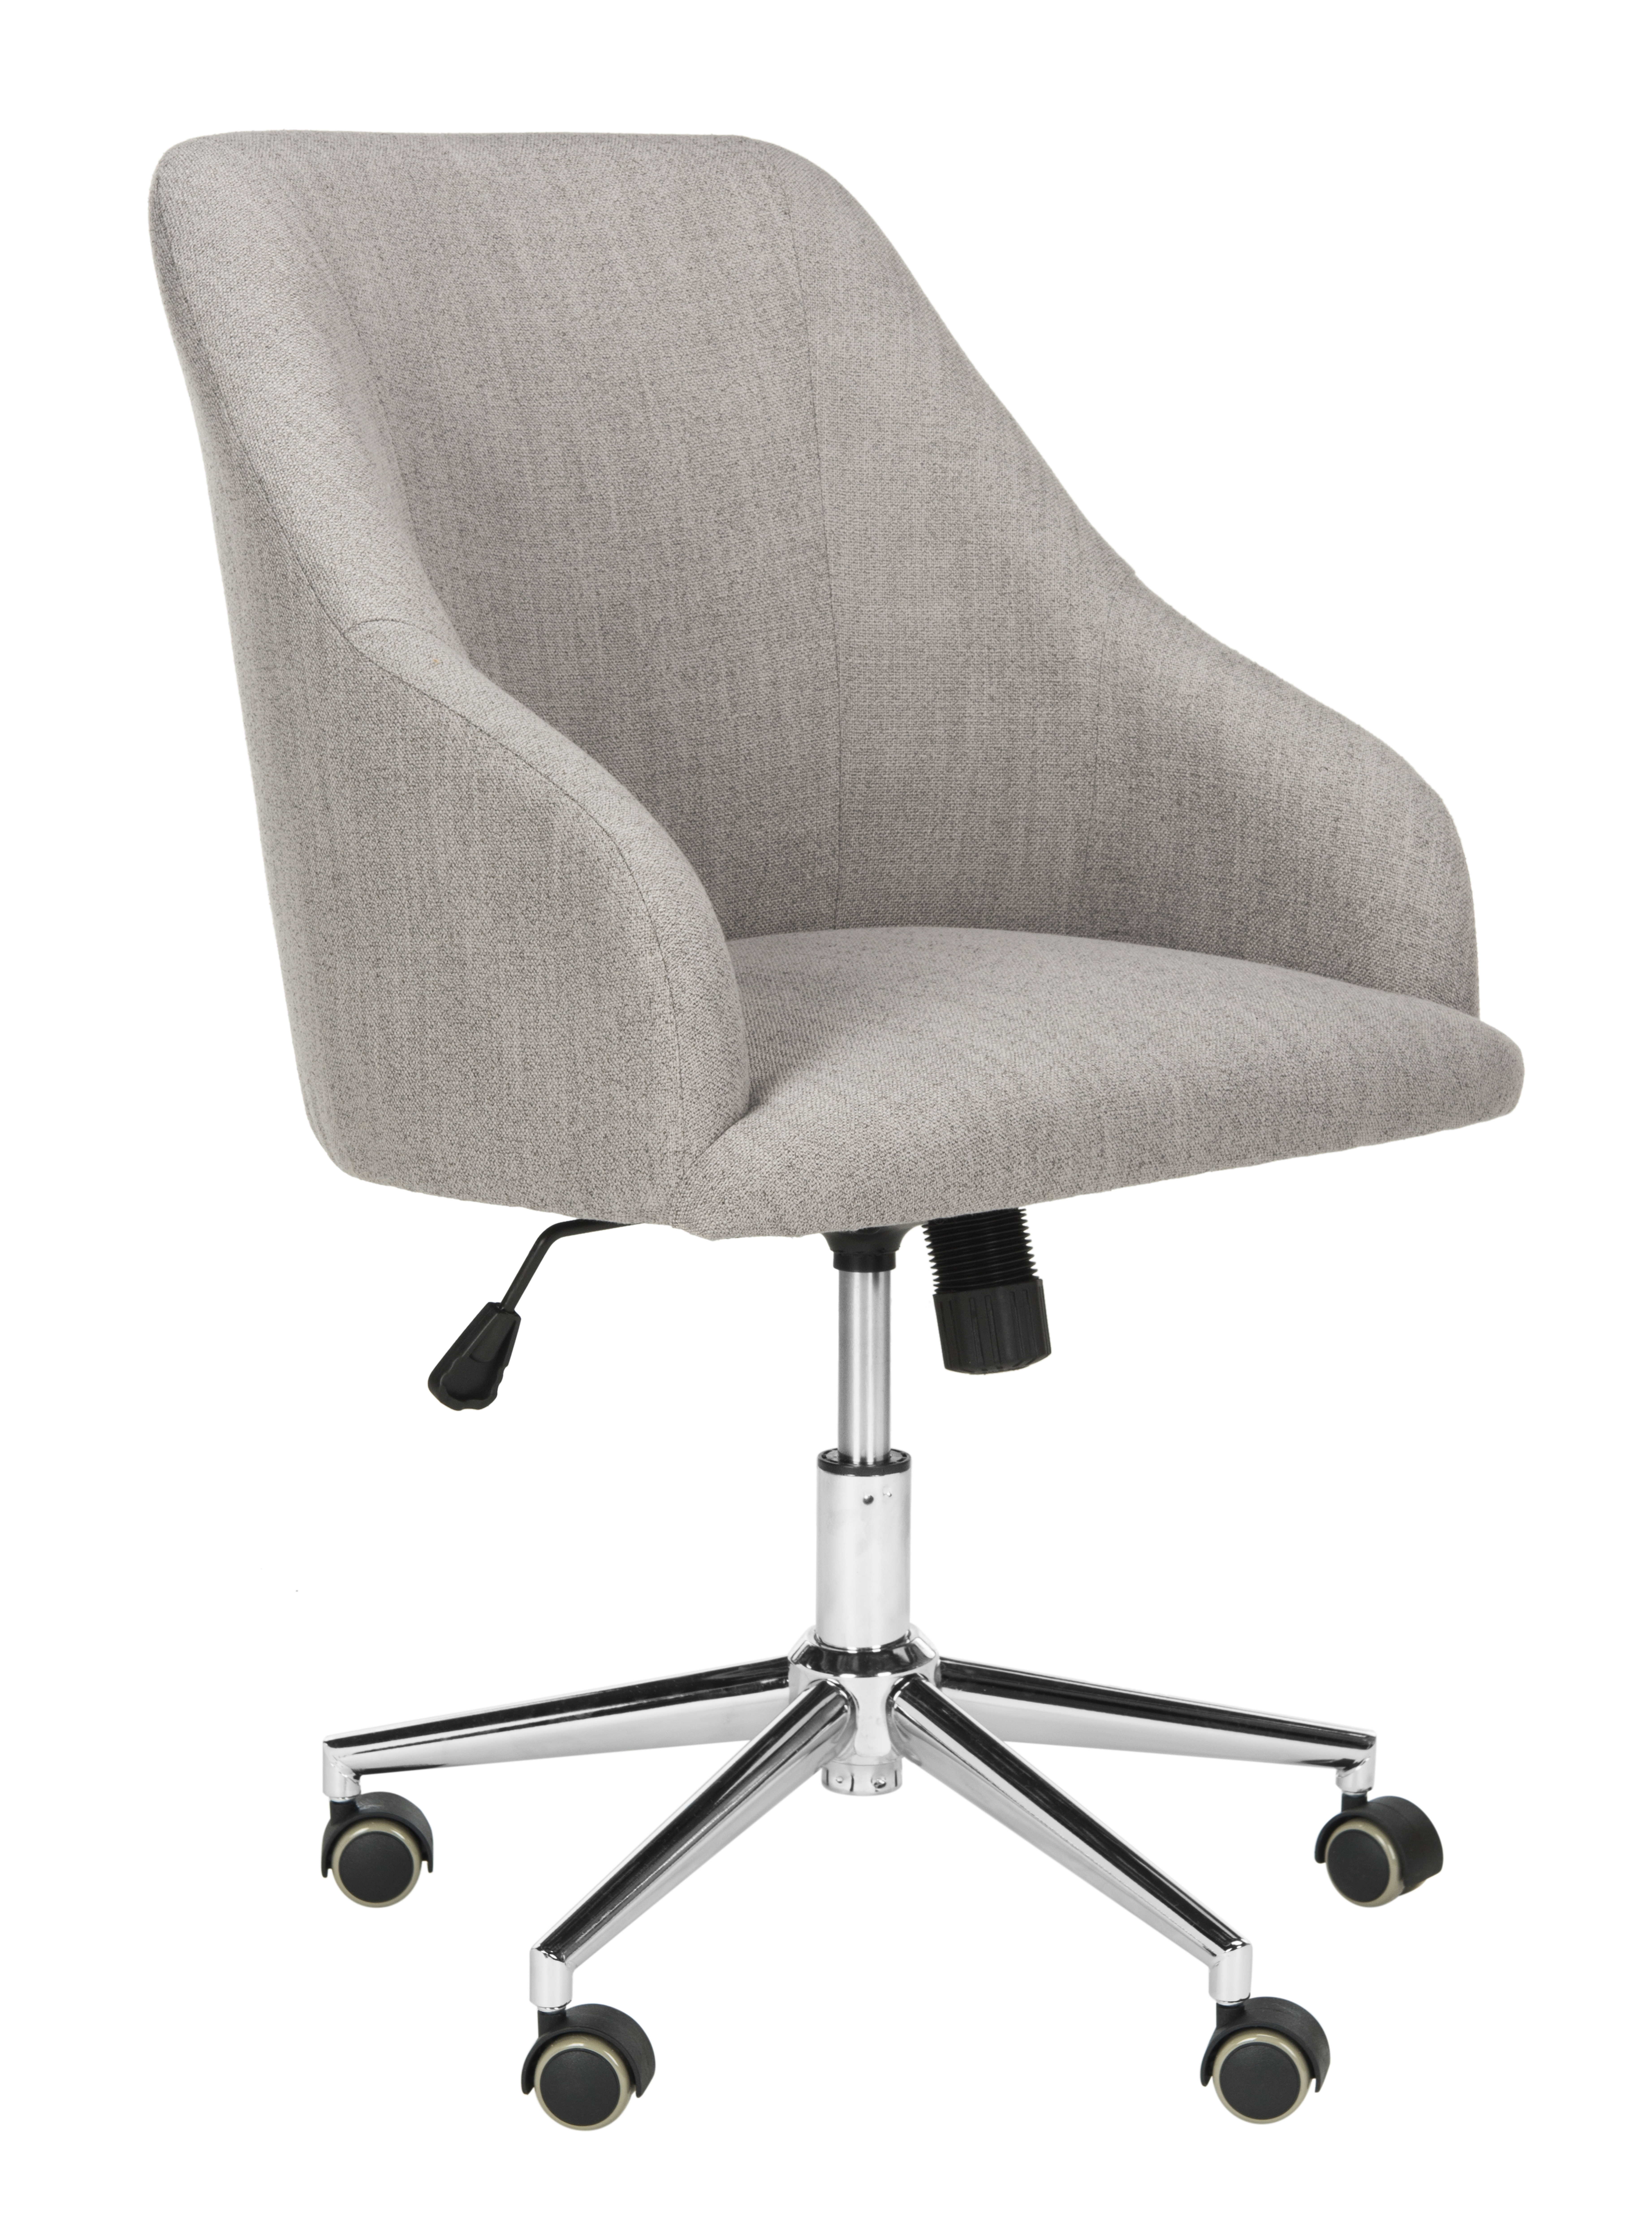 Adrienne Linen Chrome Leg Swivel Office Chair - Grey/Chrome - Arlo Home - Arlo Home